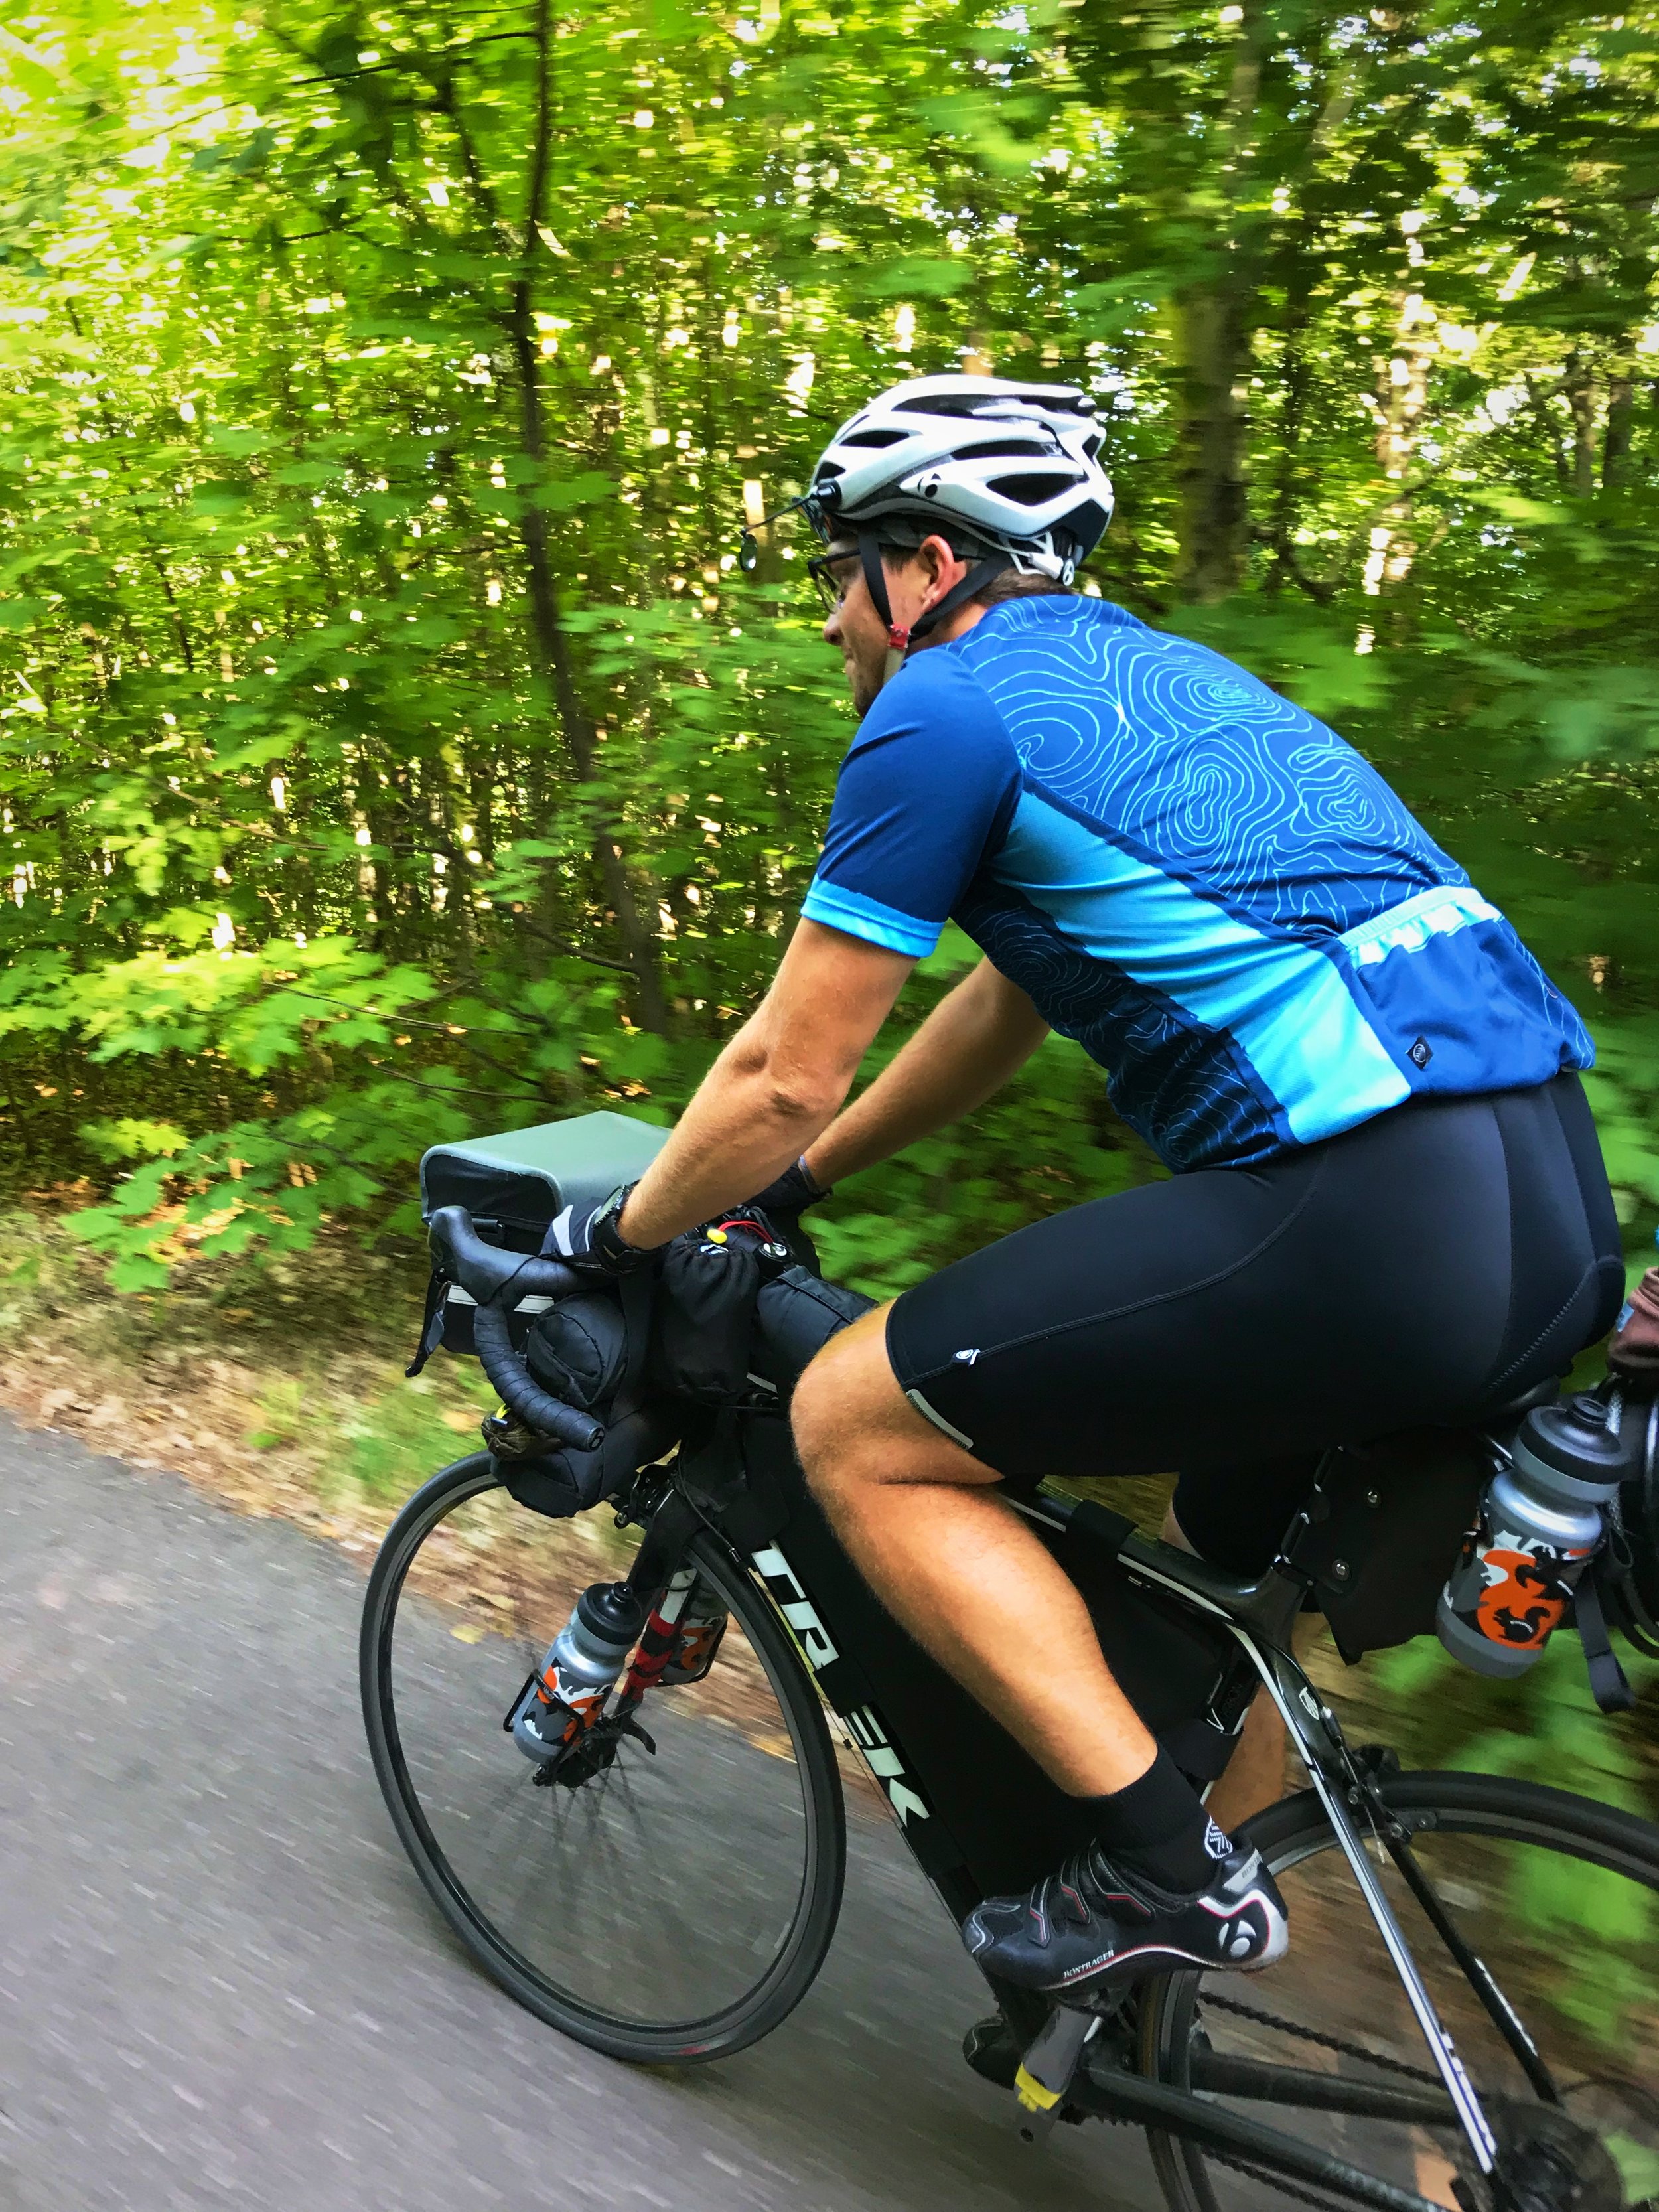 Let's Talk Padded Bike Shorts for Bike Touring — The Vanimals